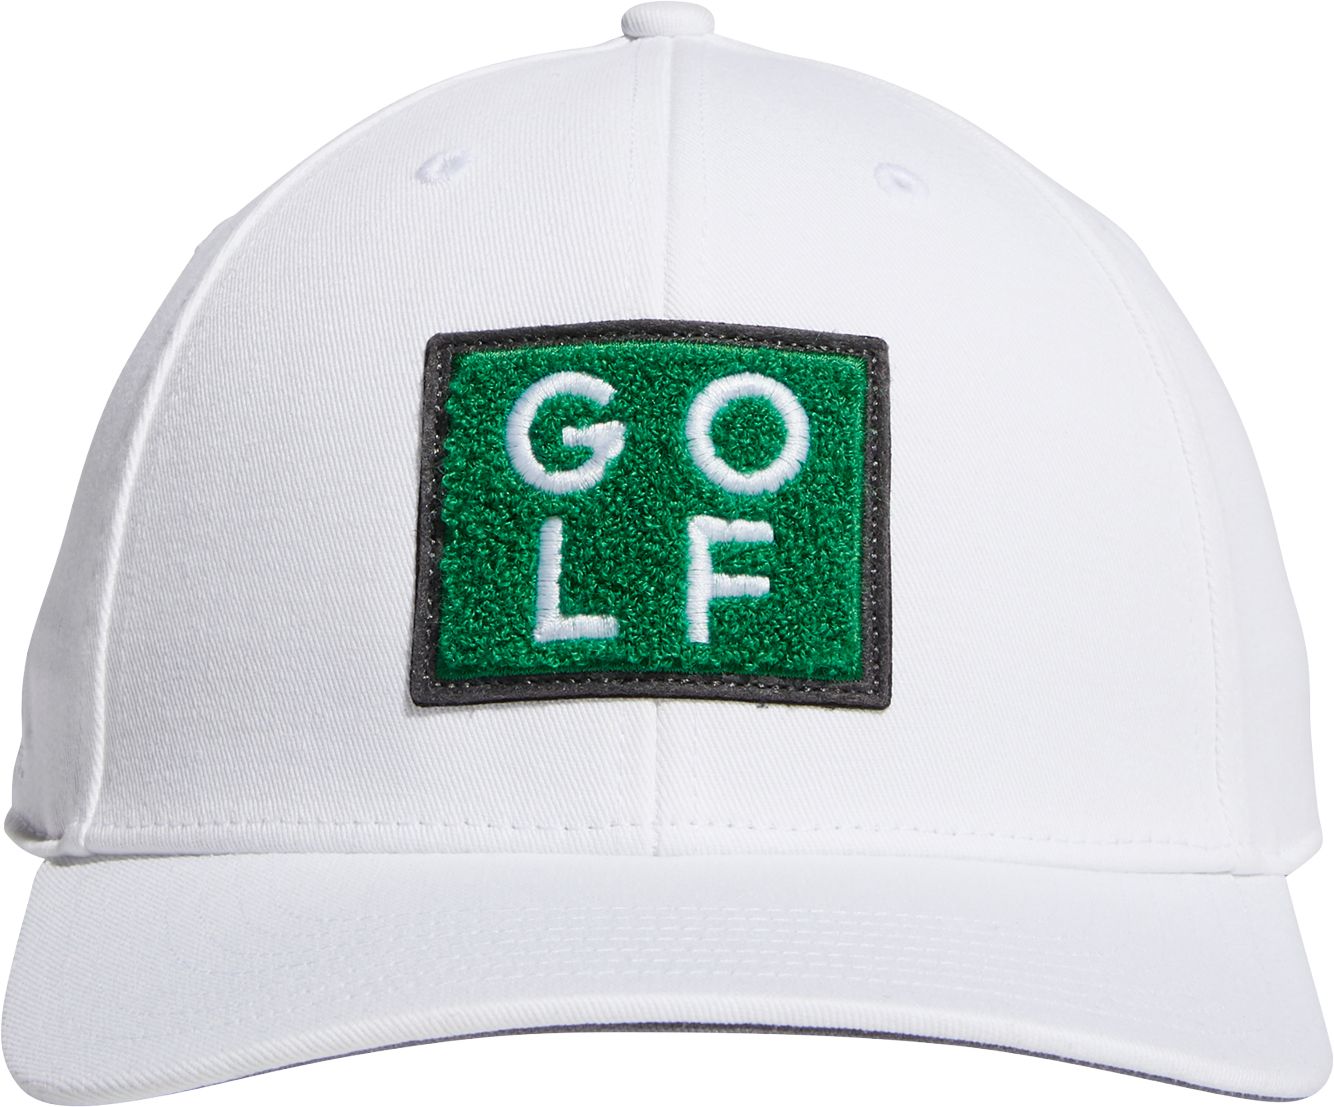 adidas golf hats